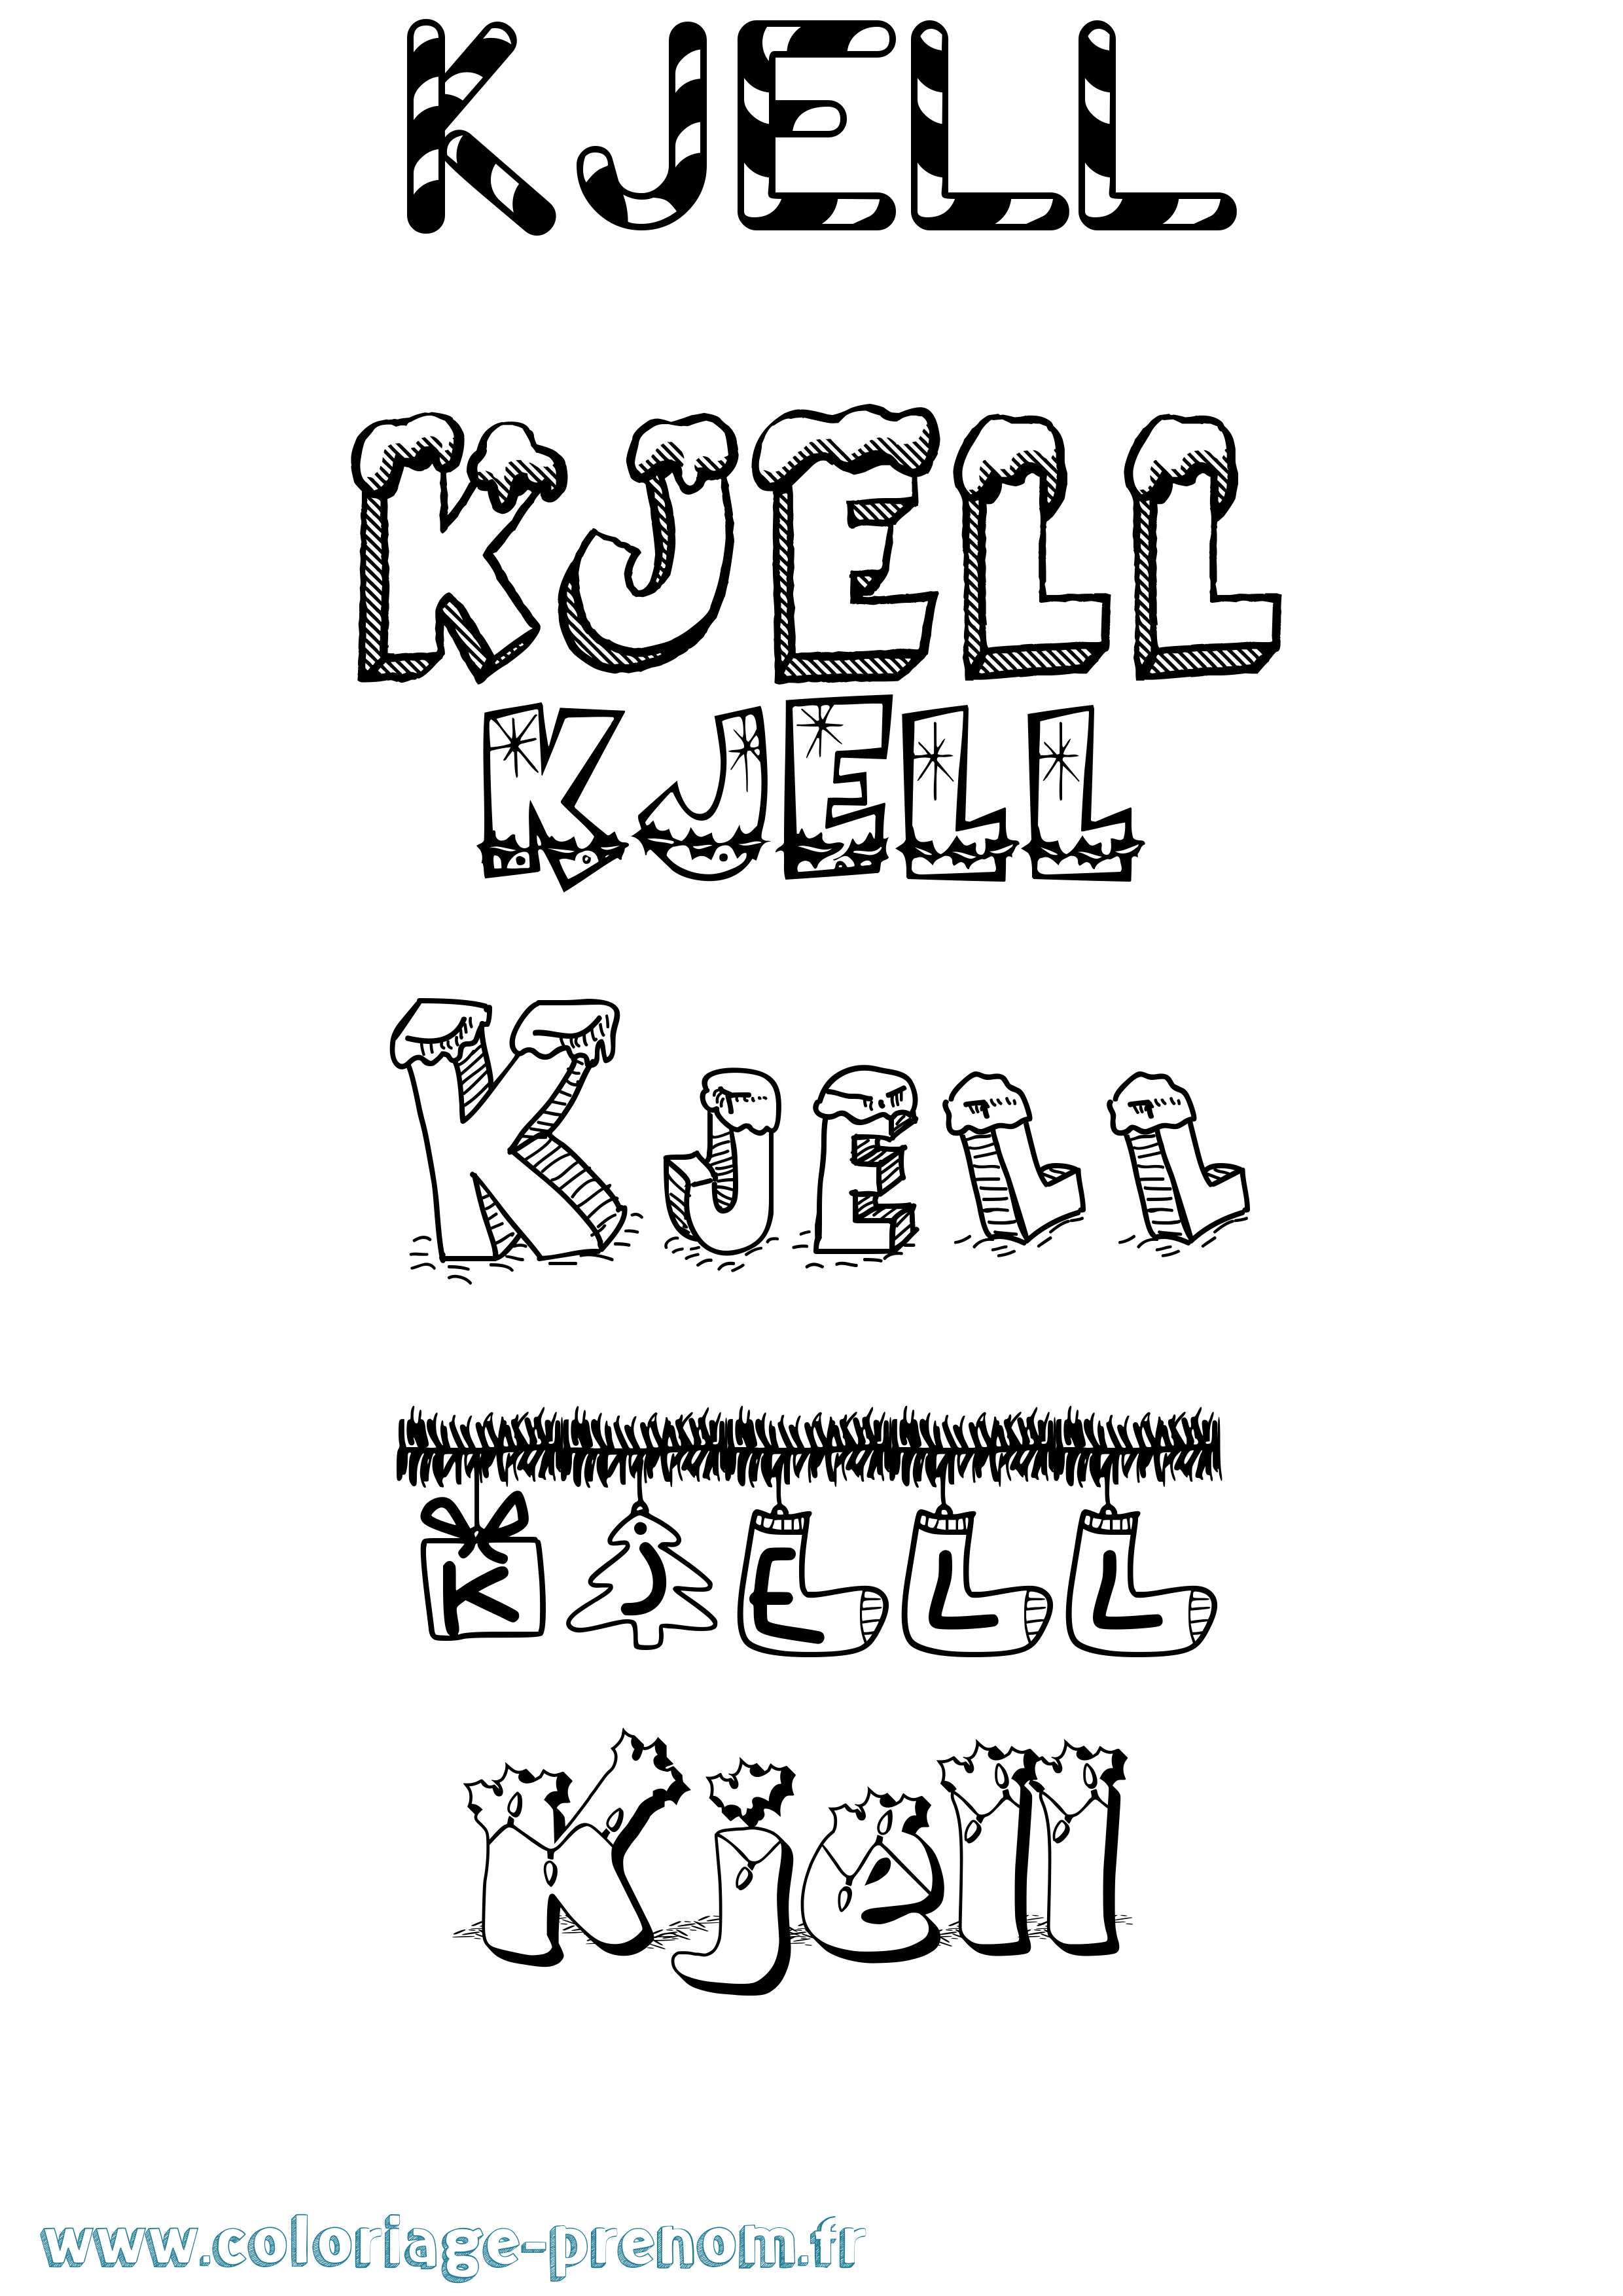 Coloriage prénom Kjell Noël